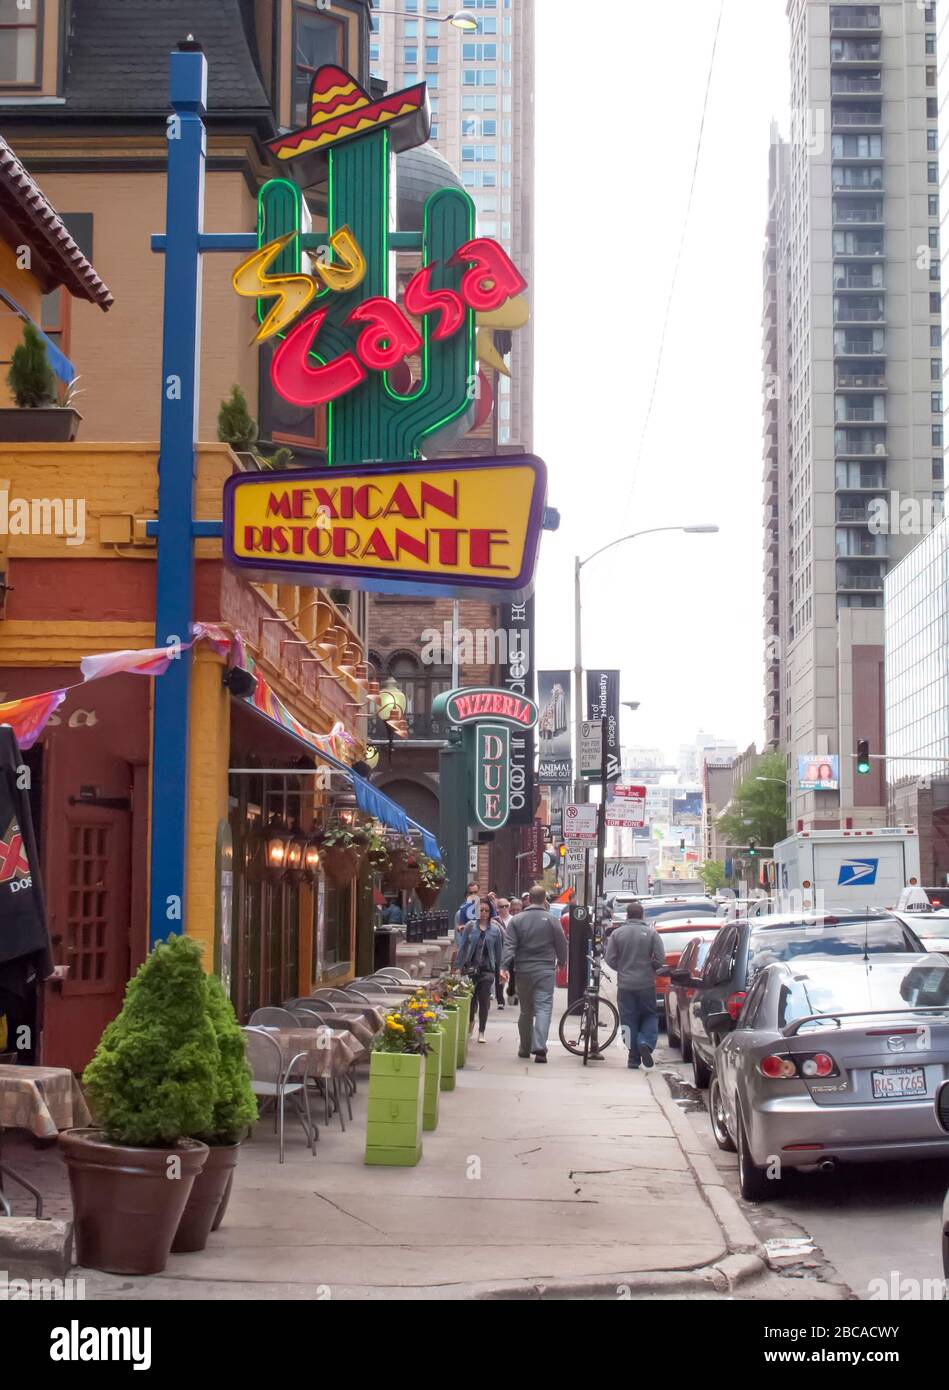 Mexican Restaurant in Chicago with Italian spelling 'Ristorante' Stock Photo